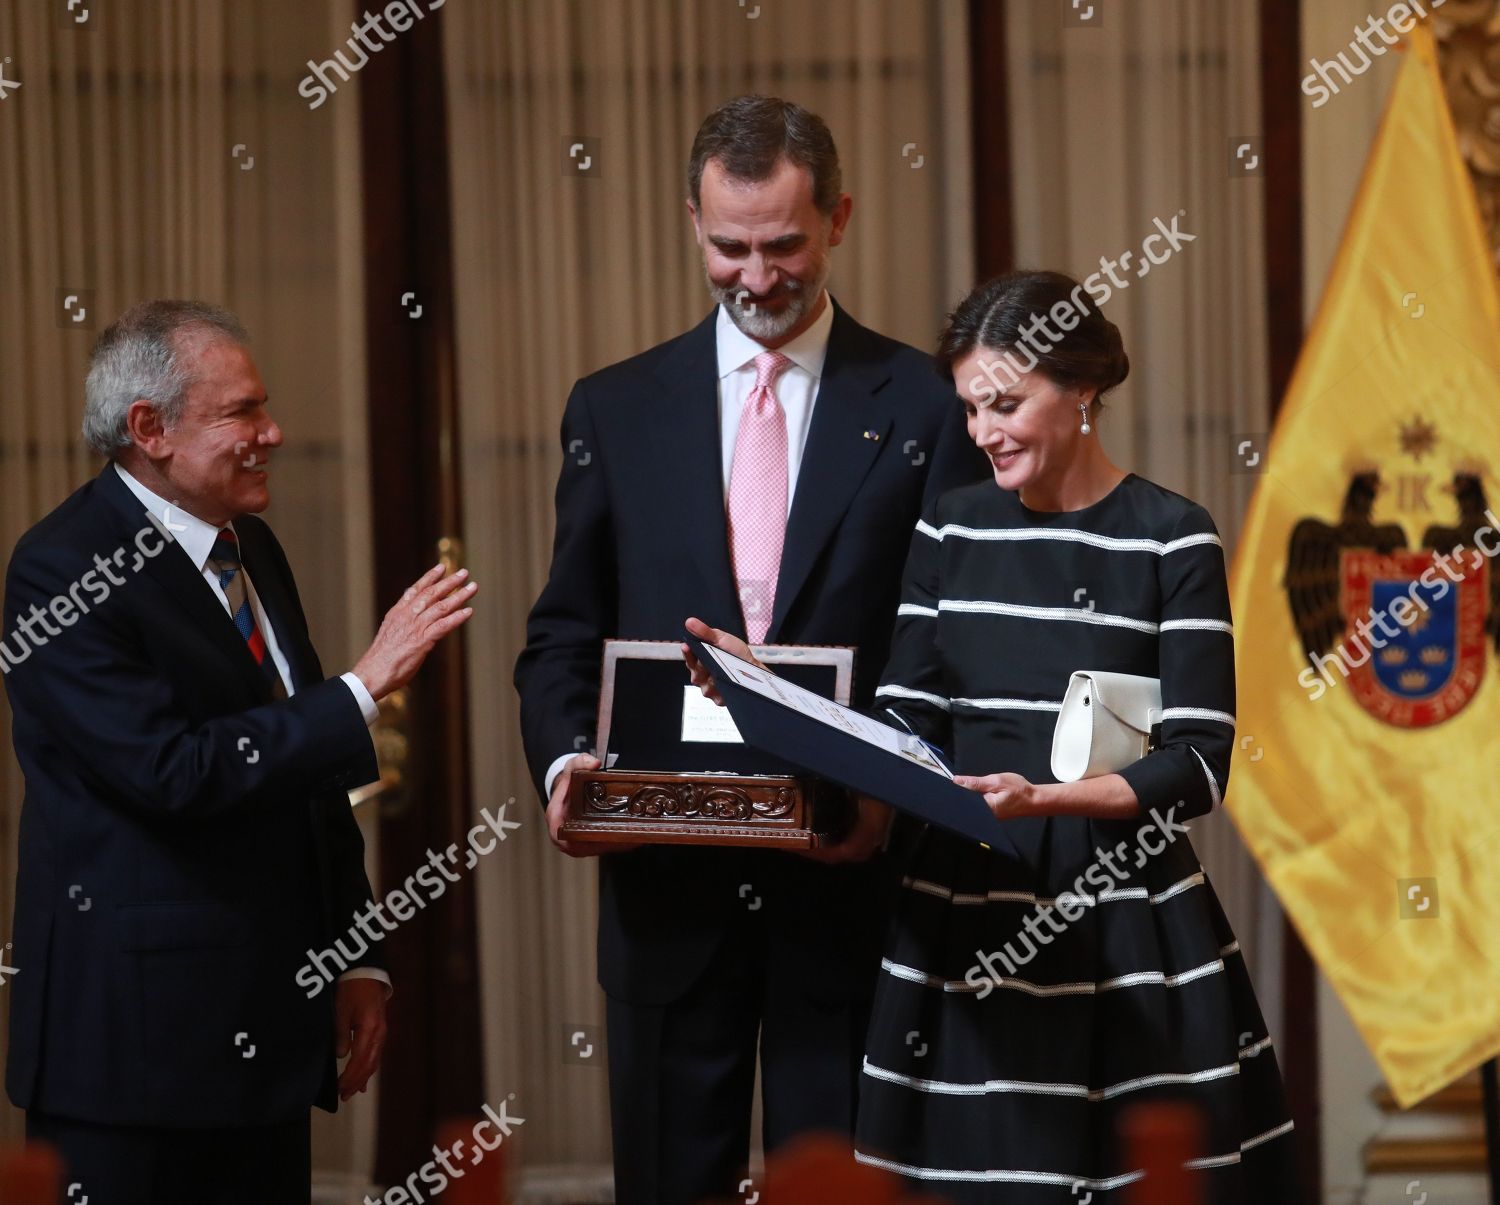 spanish-royals-visit-to-lima-peru-shutterstock-editorial-9977226z.jpg